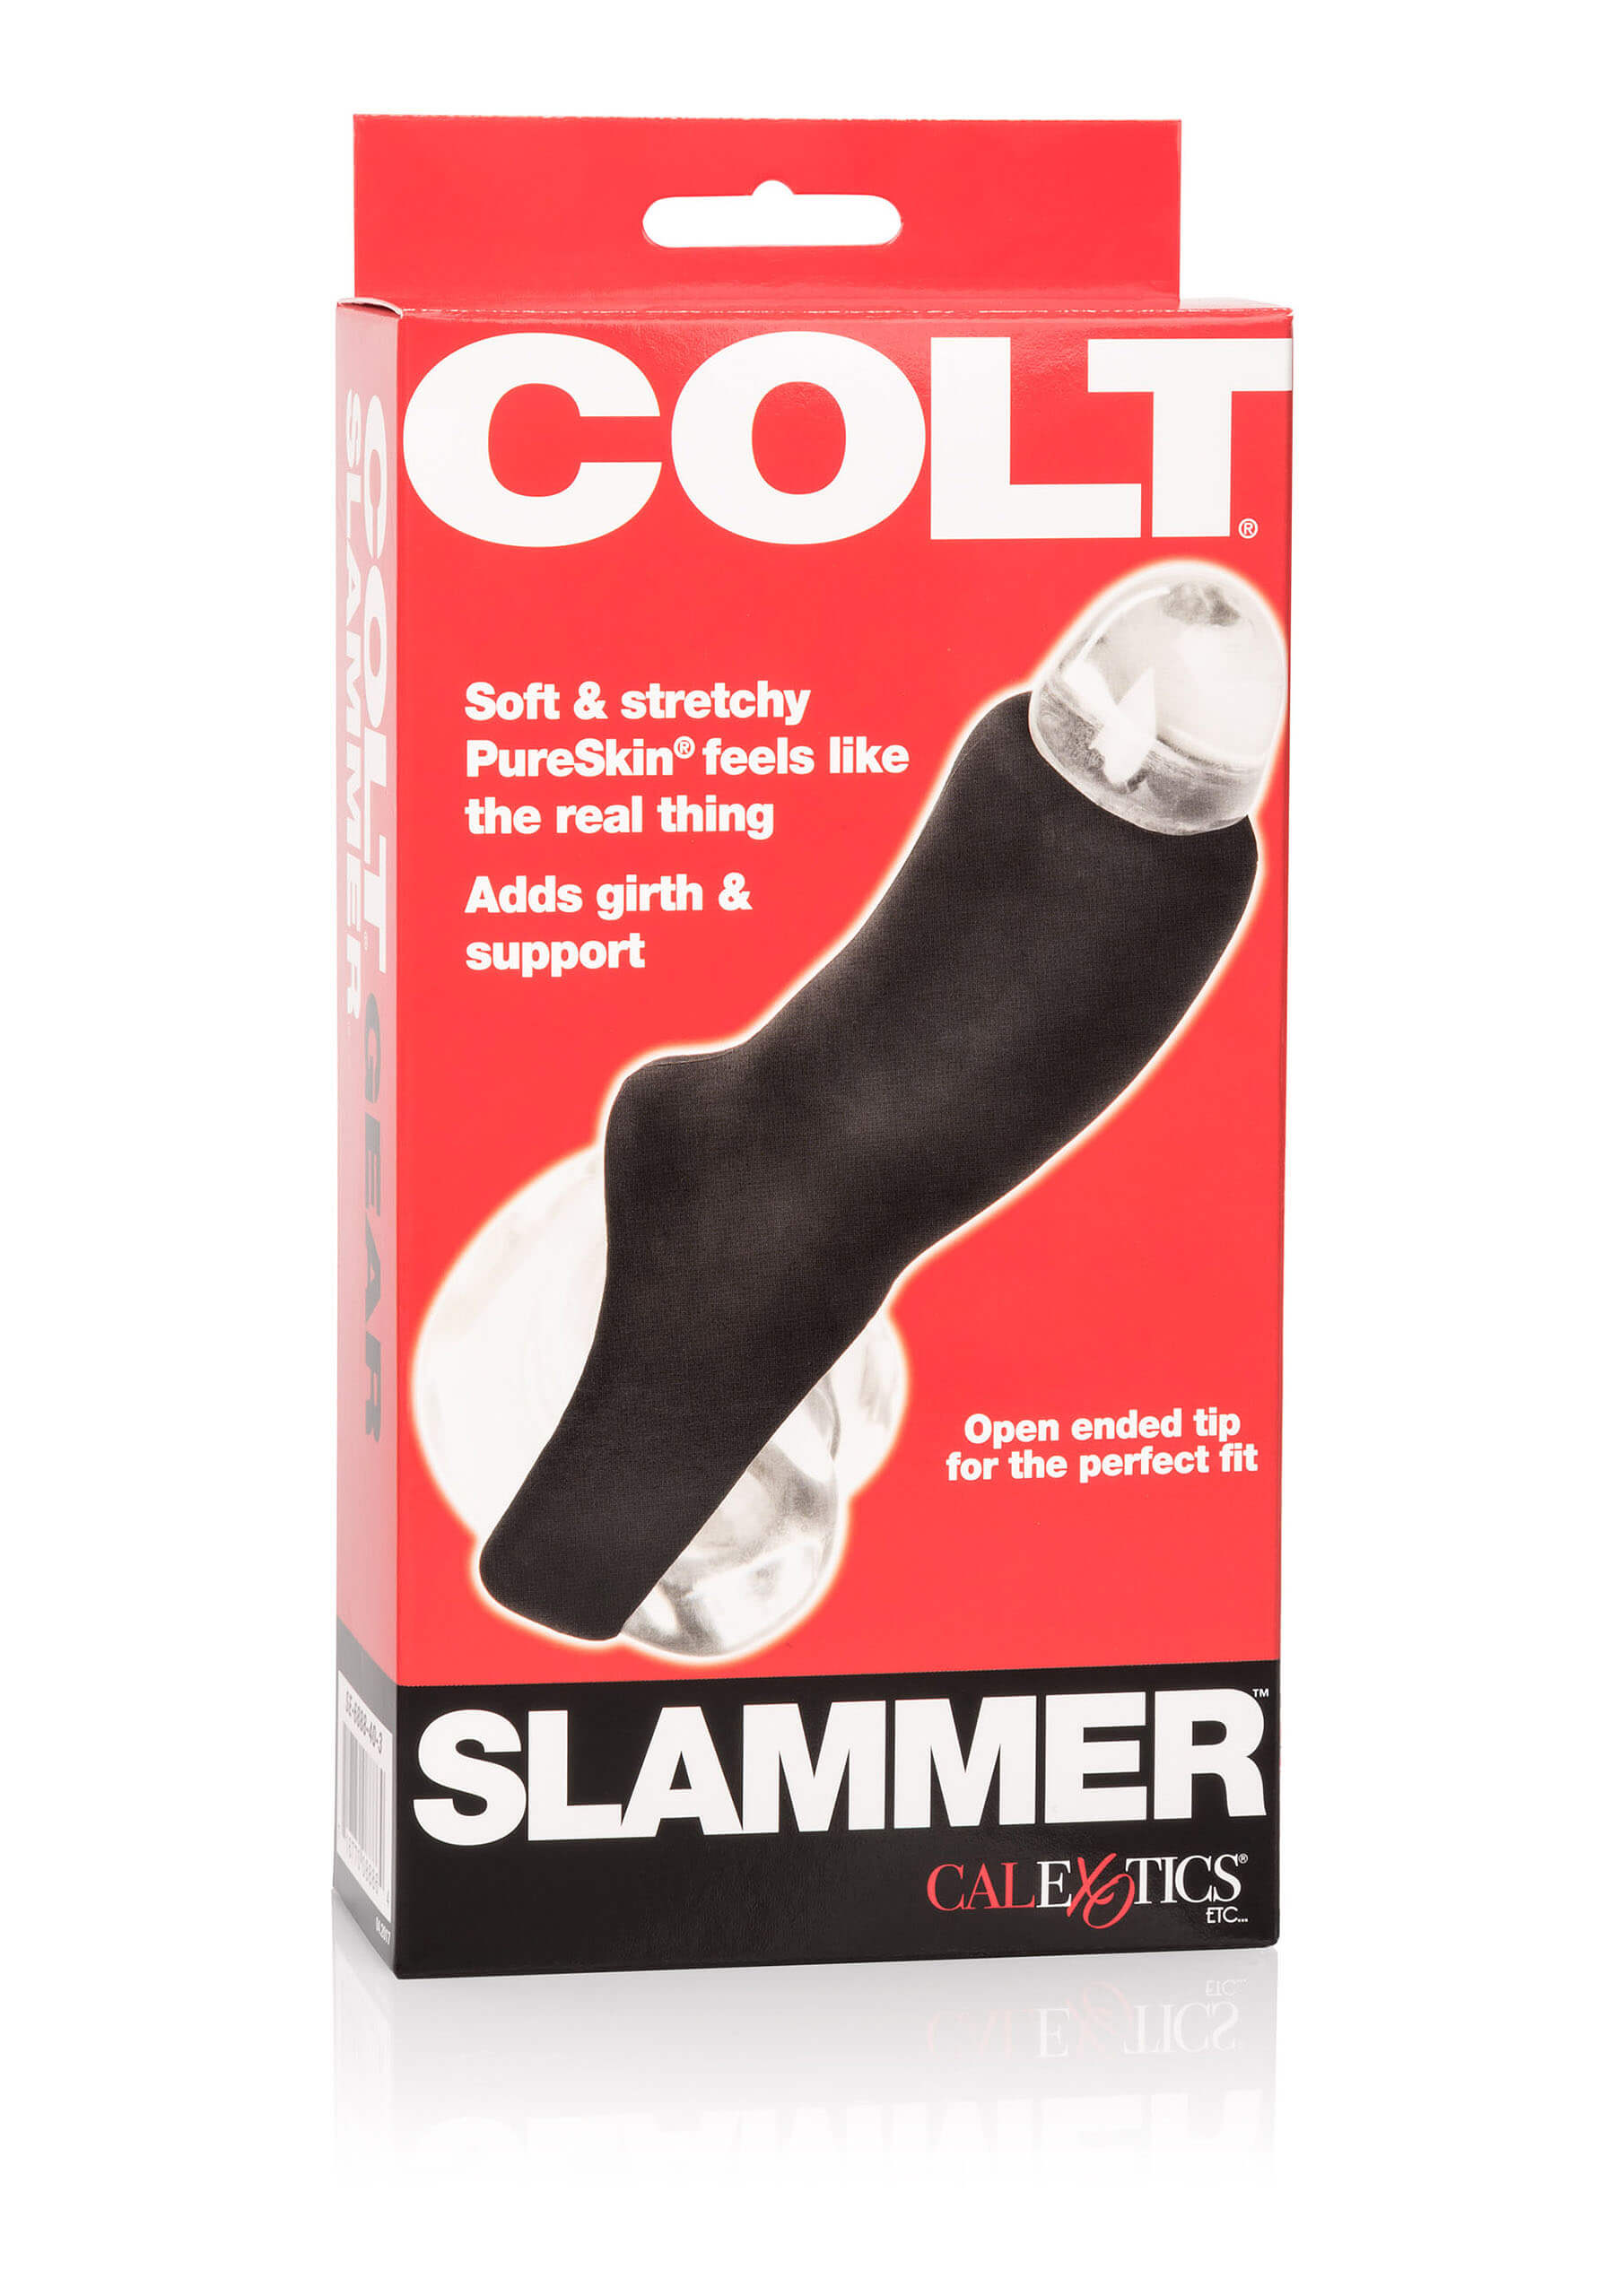 COLT Gear Colt Slammer, široký návlek na penis a varlata